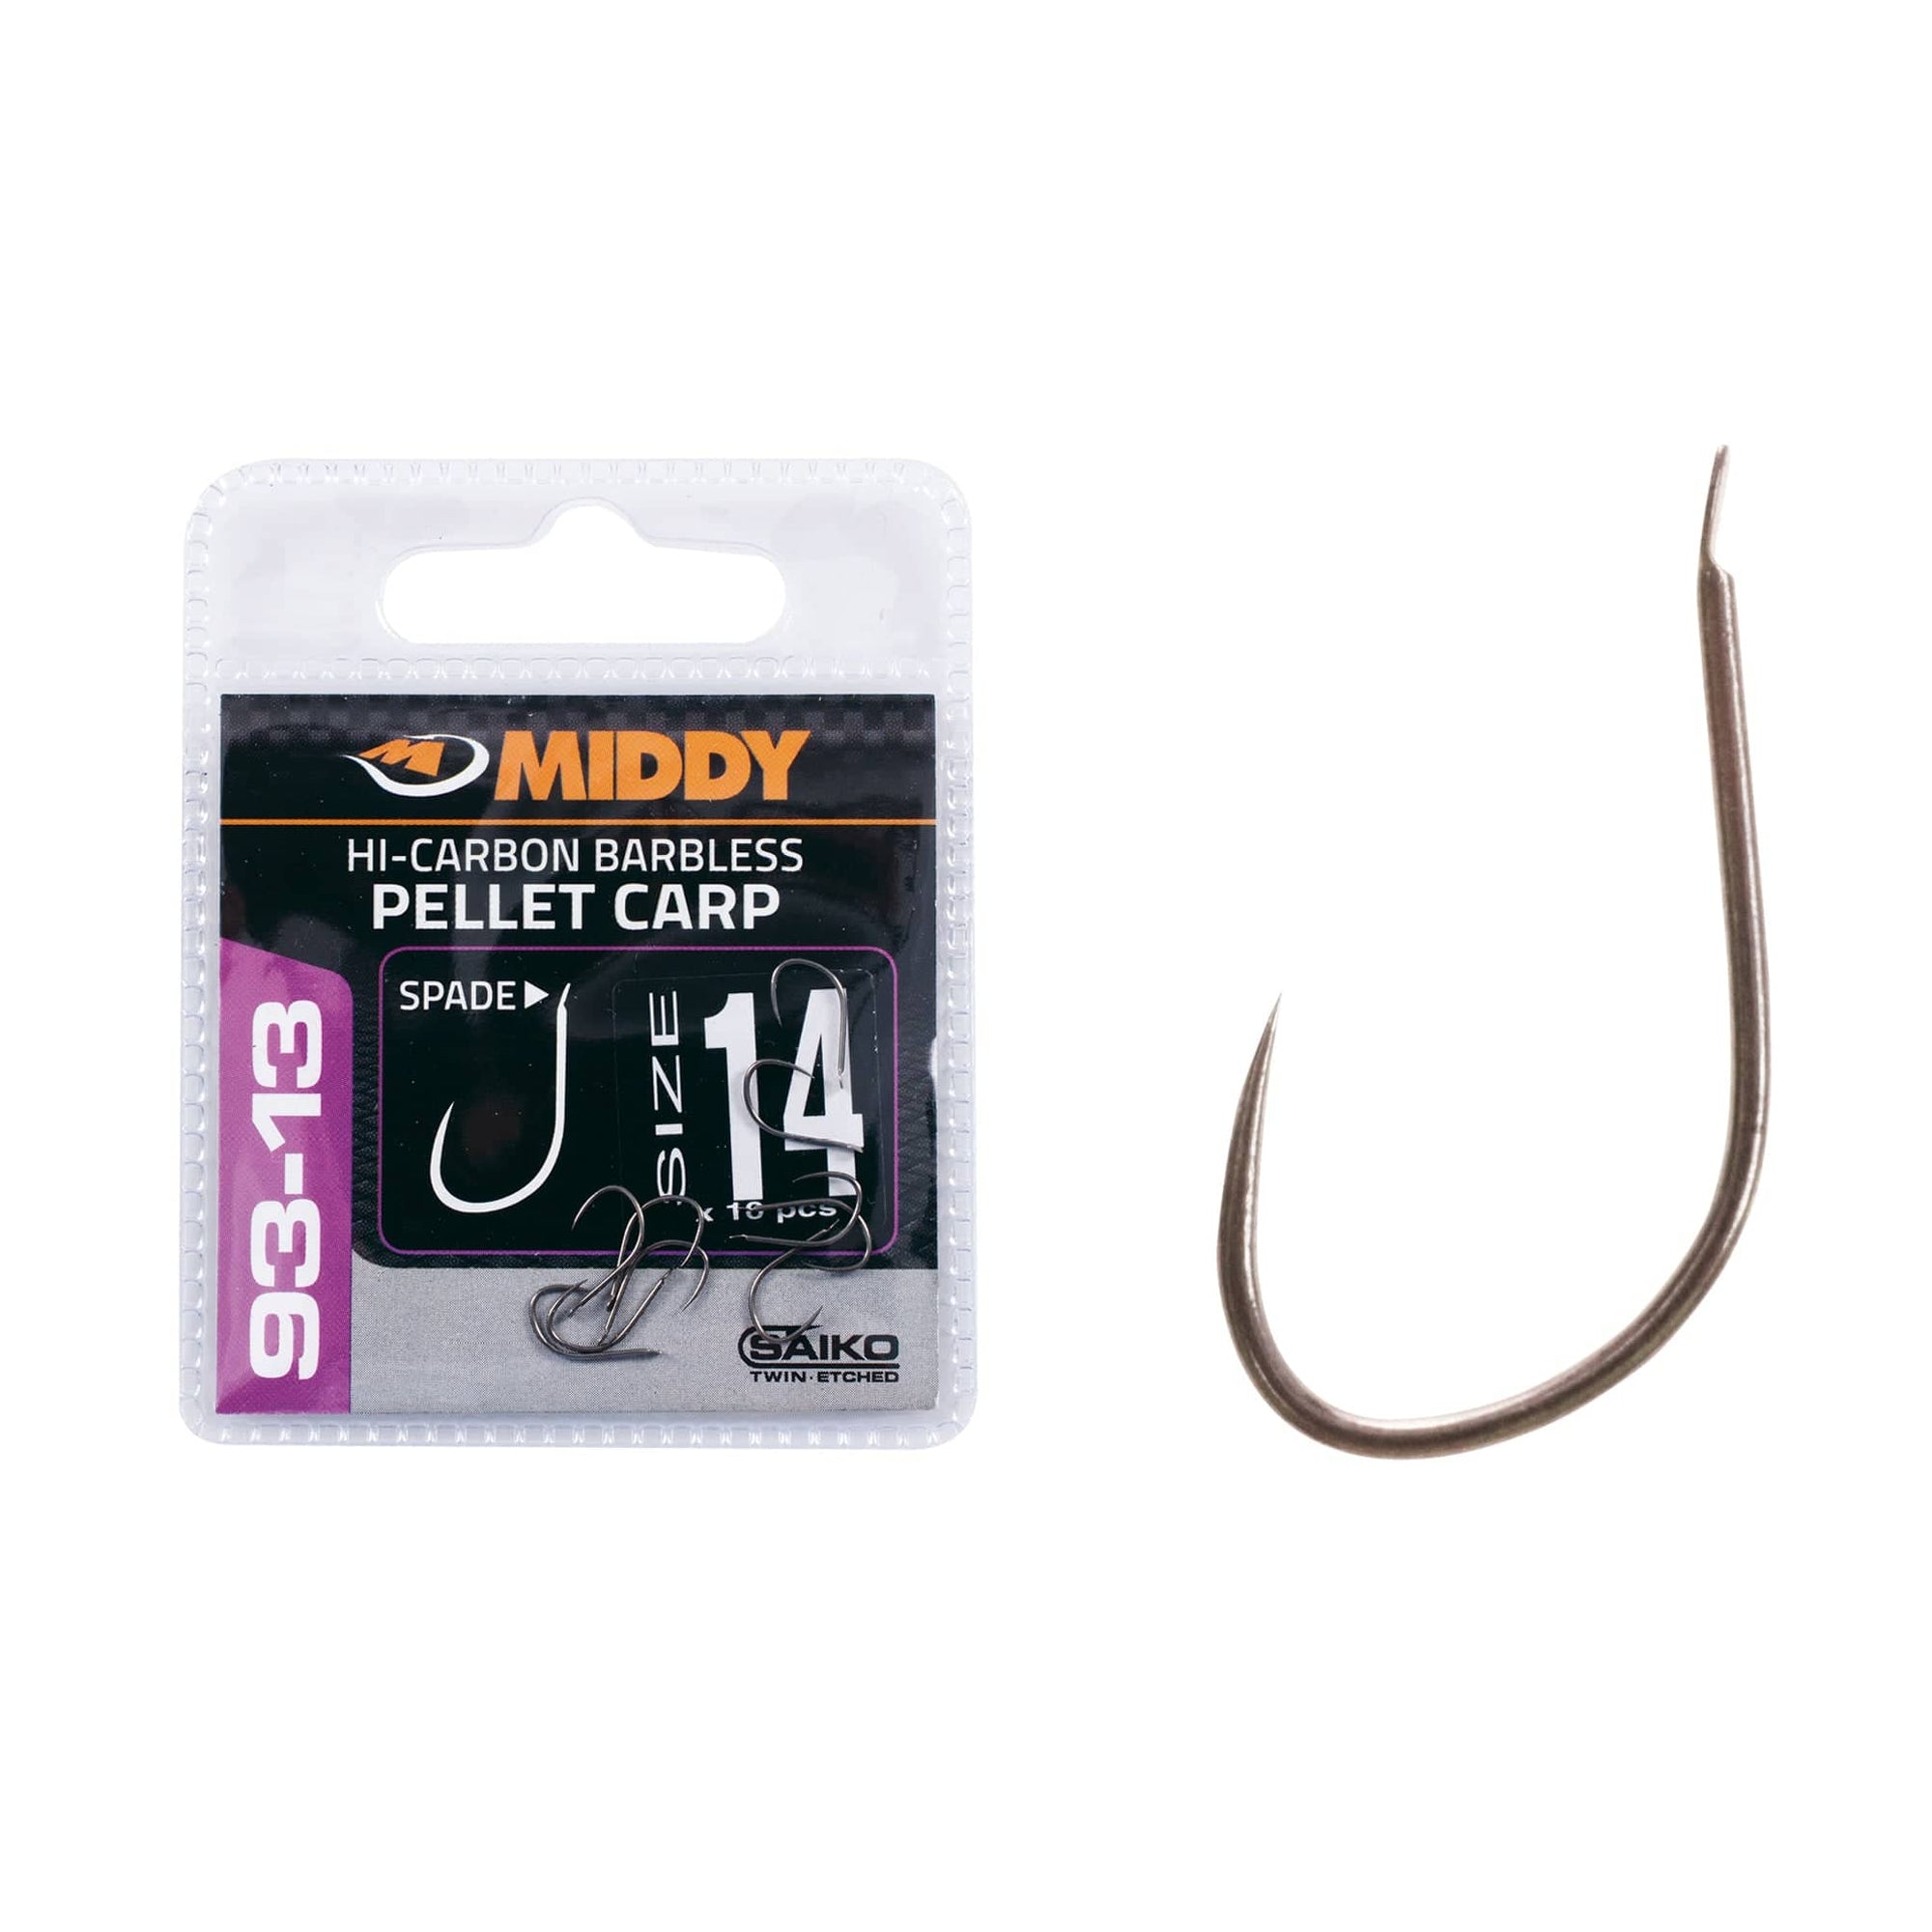 MIDDY 93-13 Pellet Carp Spade Hooks 10s - 18s sizes - (10pc pkt).